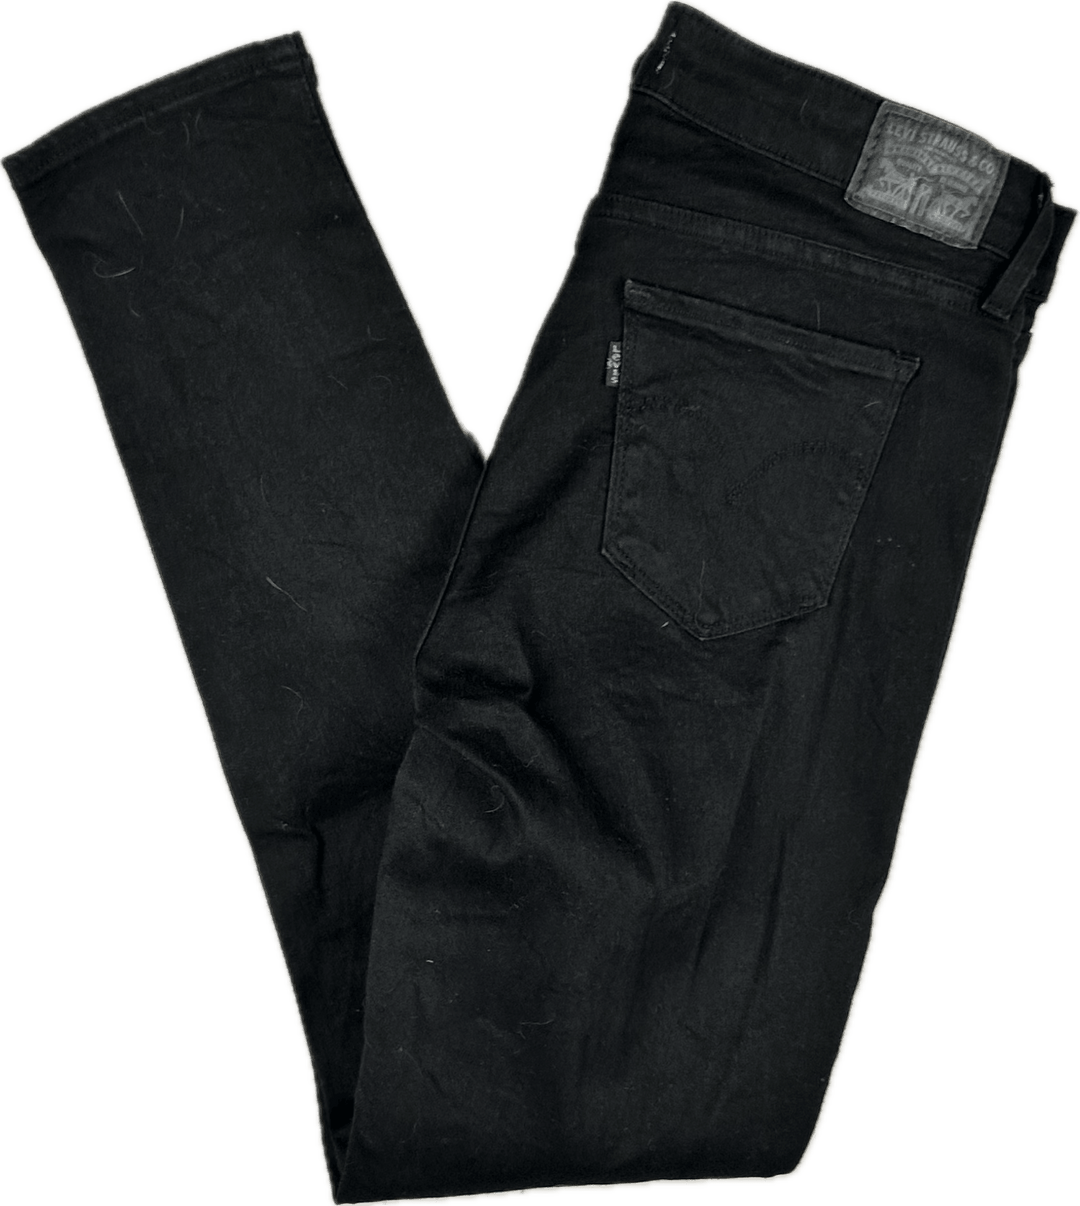 Levis 711 Black Mid Rise Skinny Jeans -Size 30 - Jean Pool